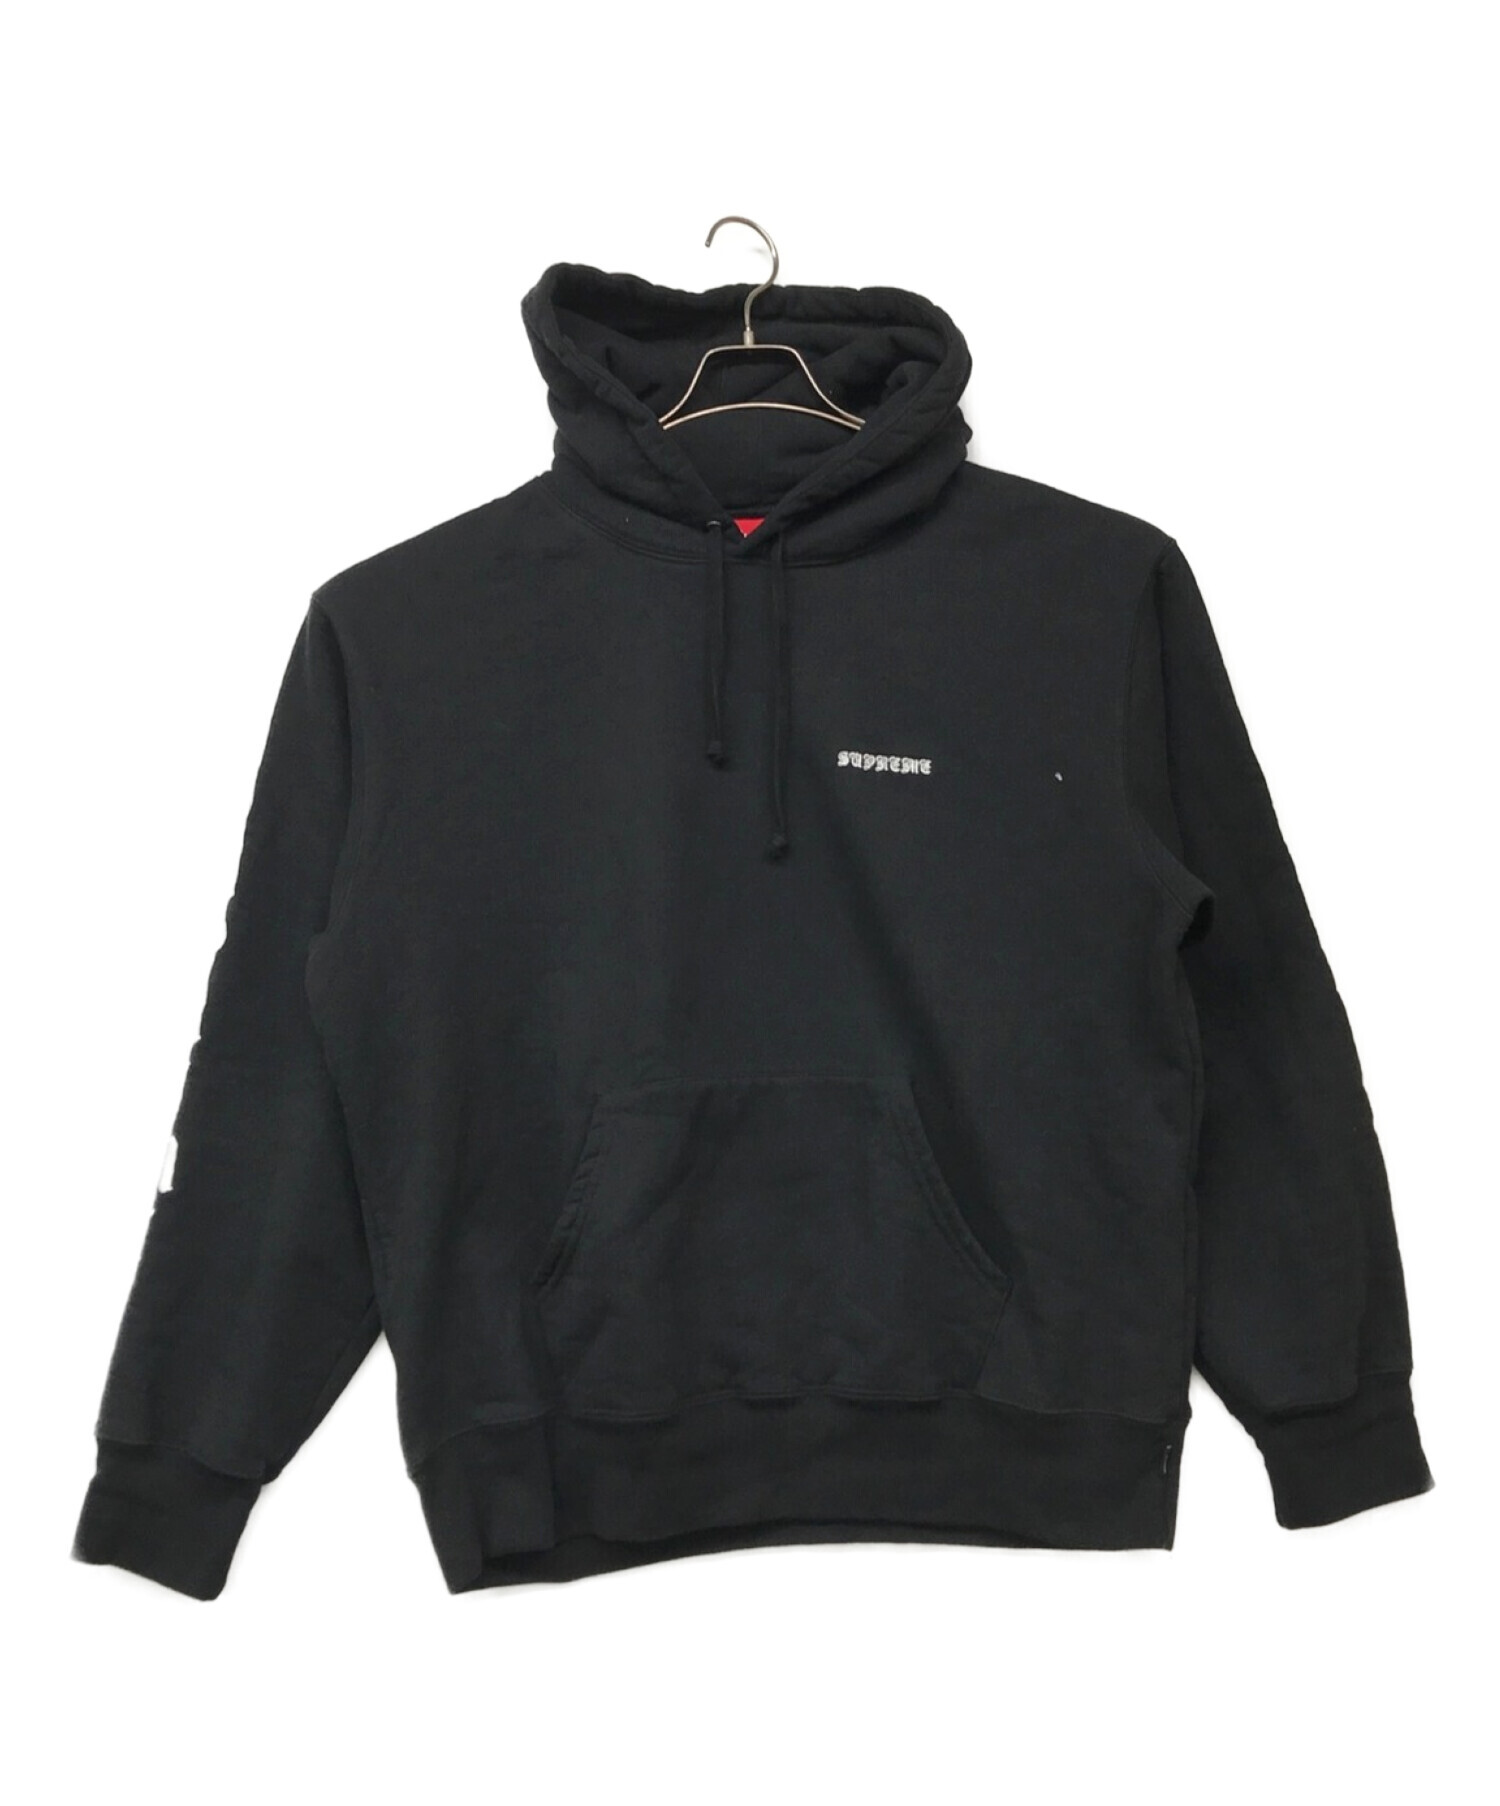 supreme peace hooded sweatshirt black